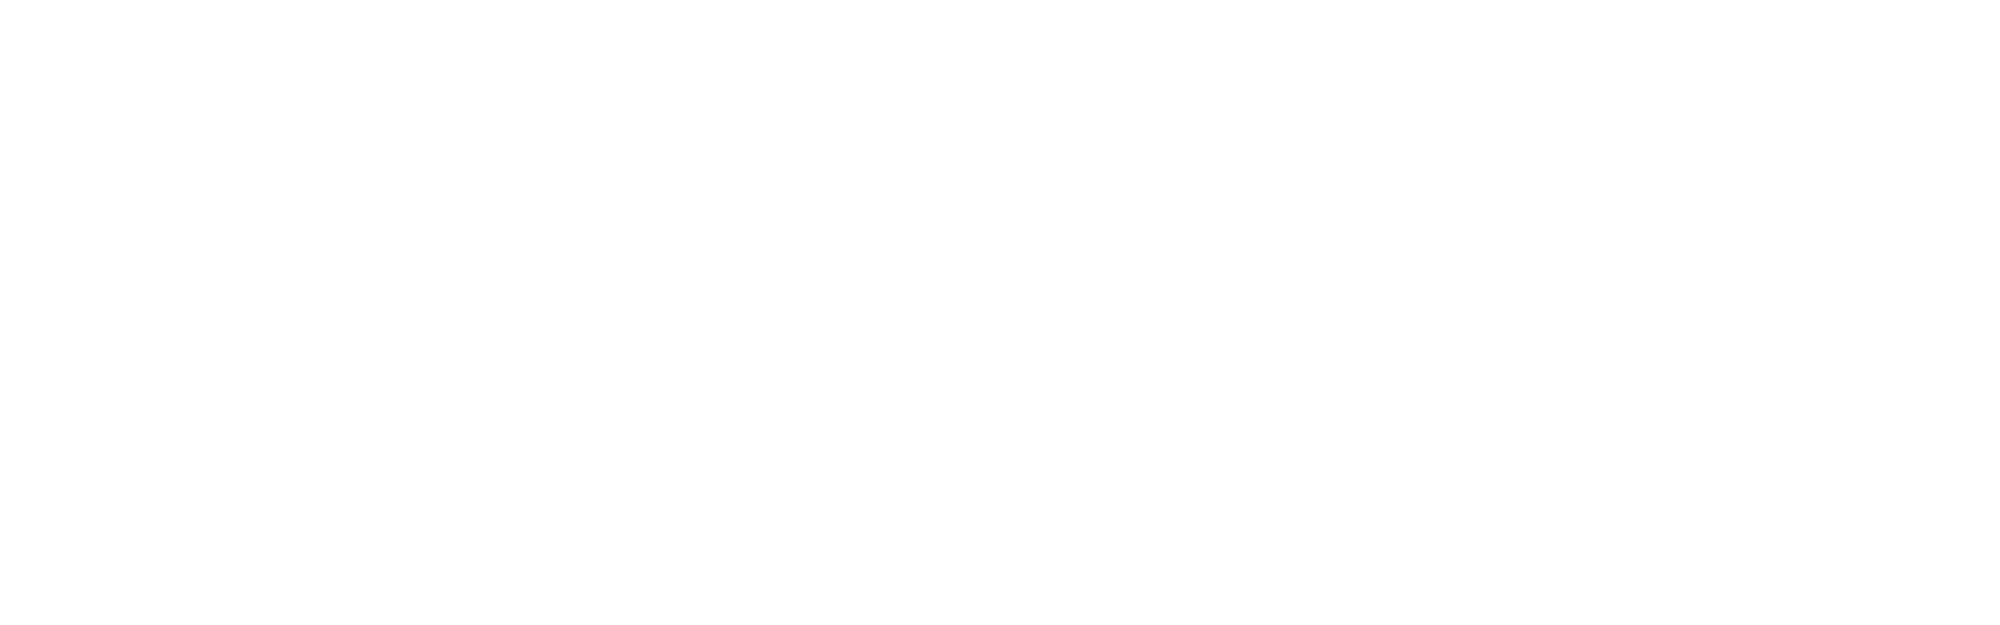 True Safety University